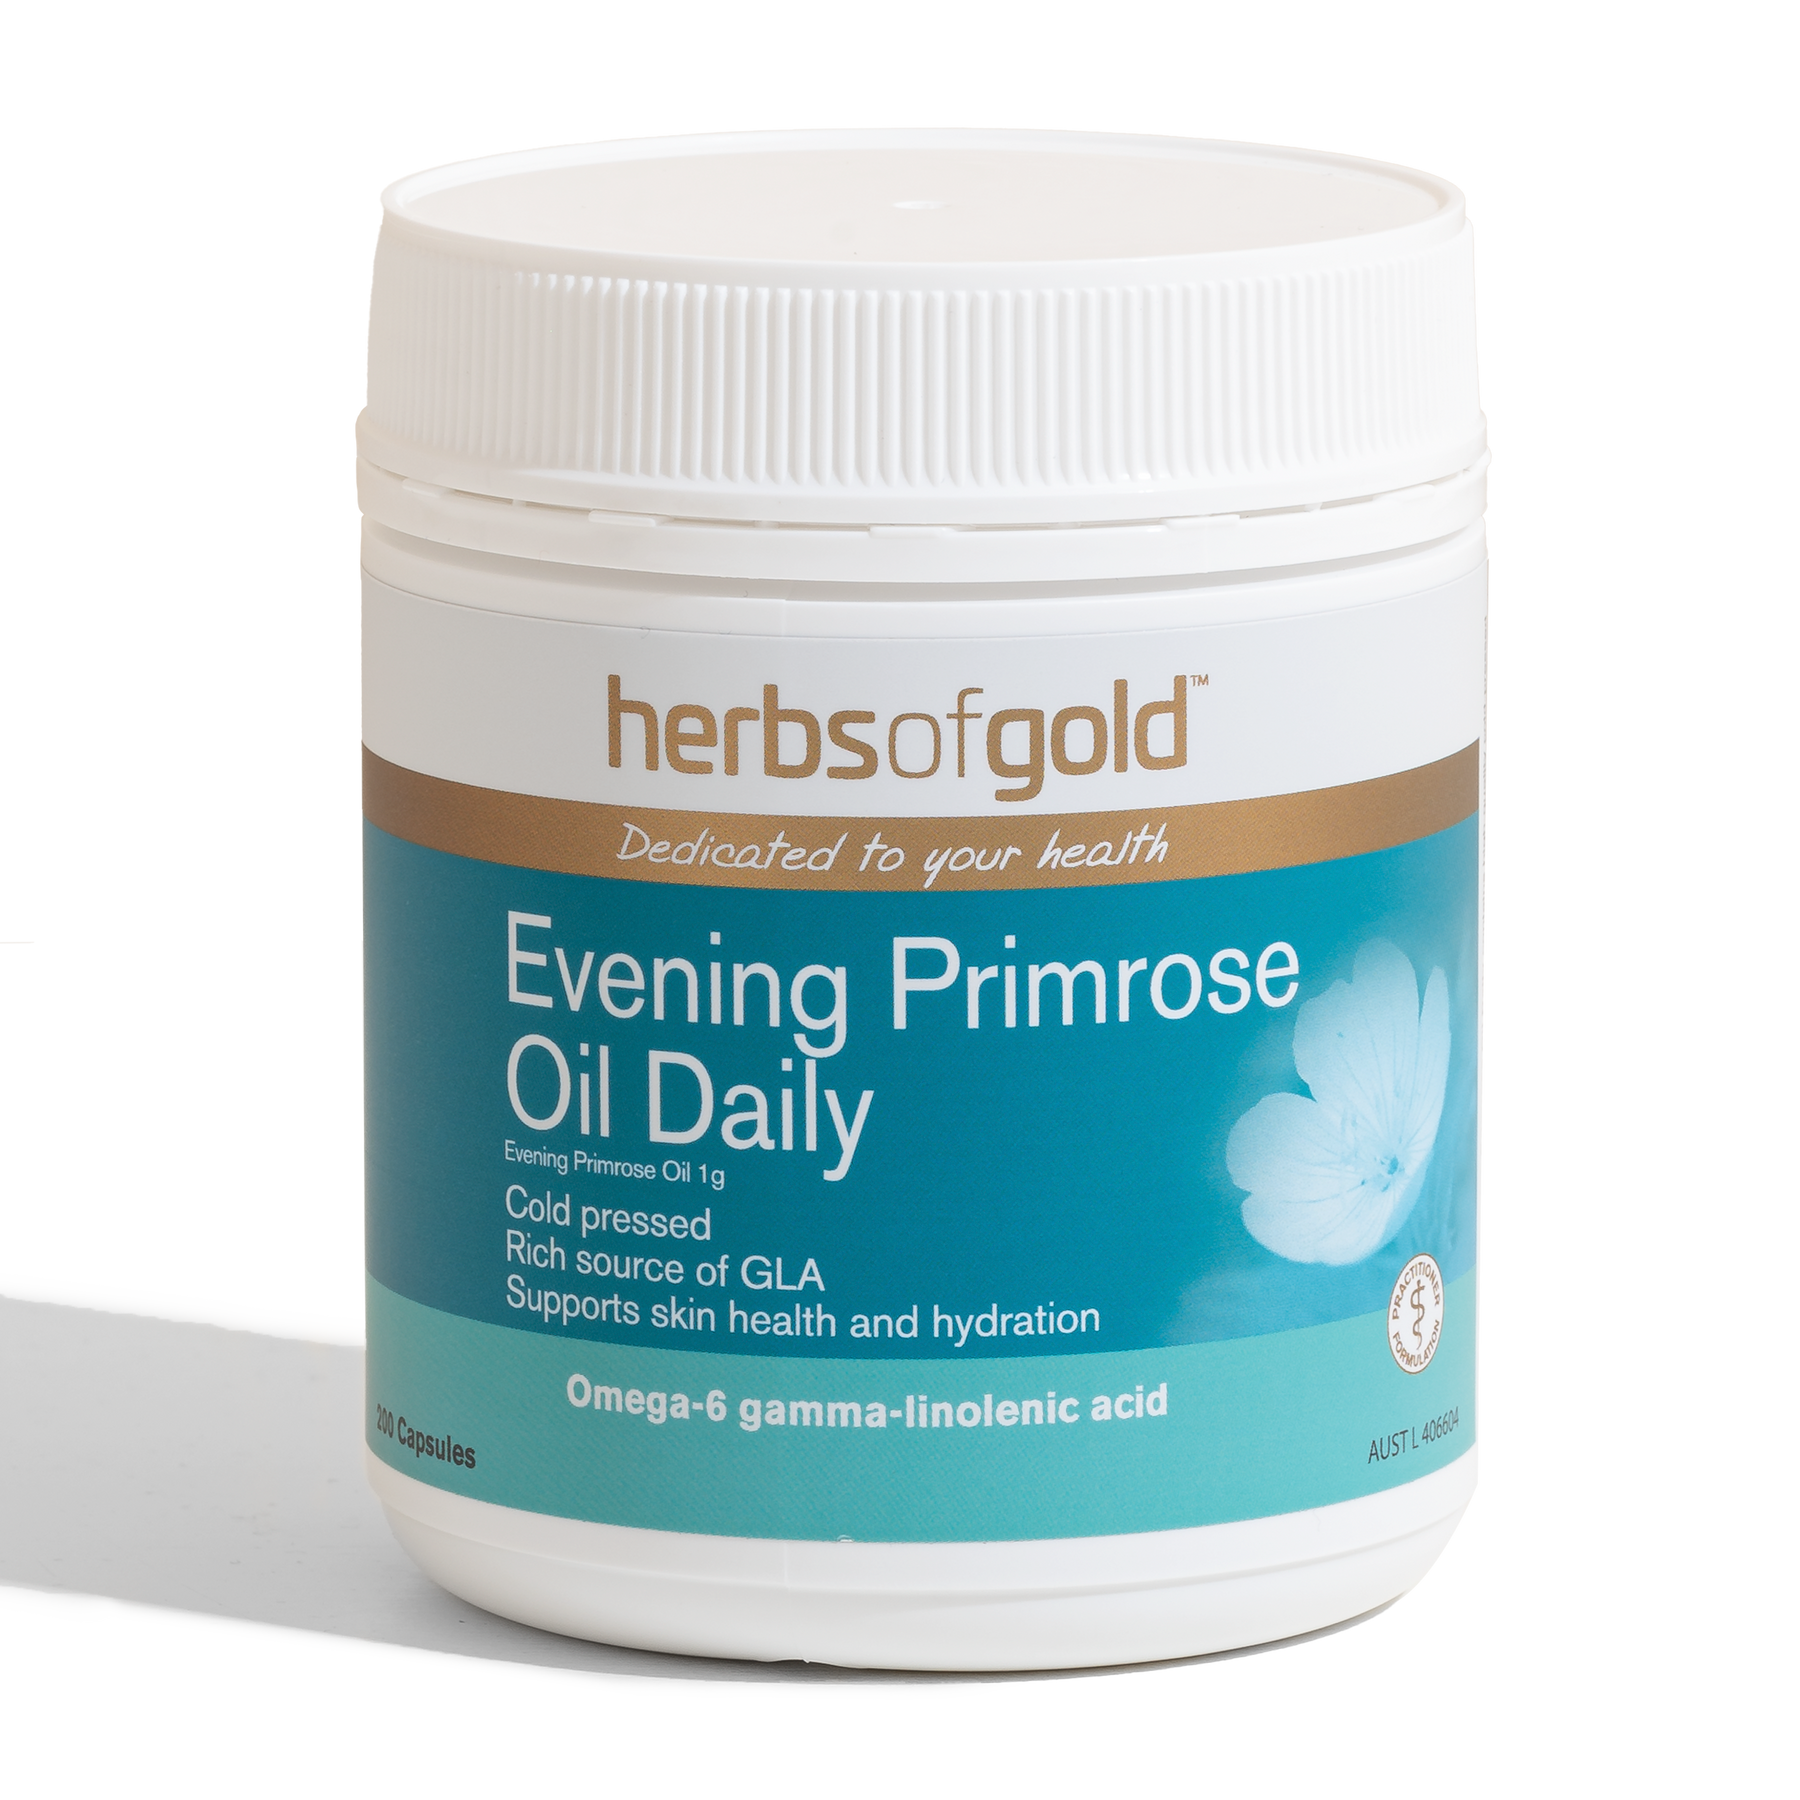 Evening Primrose Oil Daily